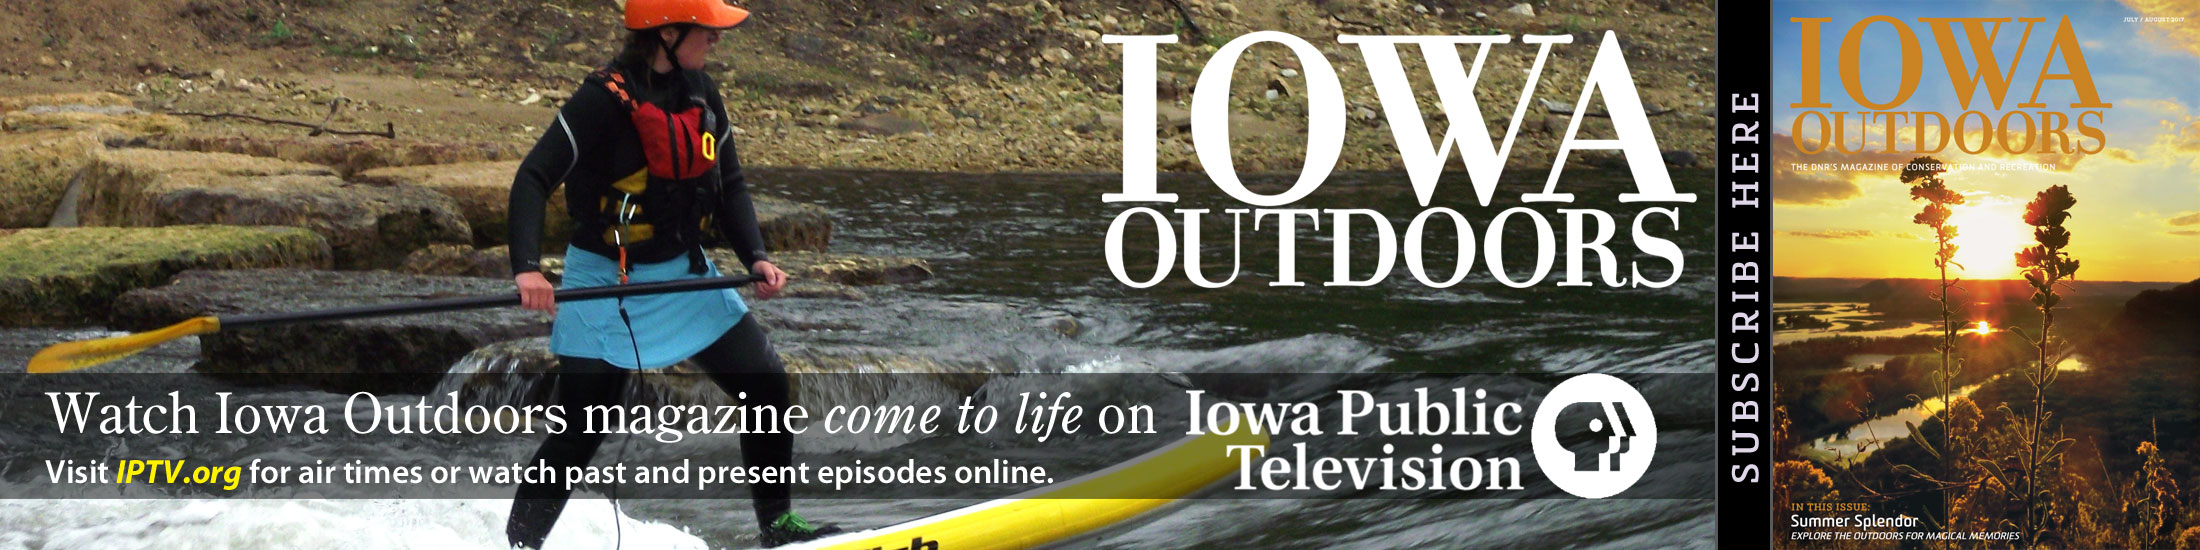 Iowa Outdoors Magazine, IPTV TV Show